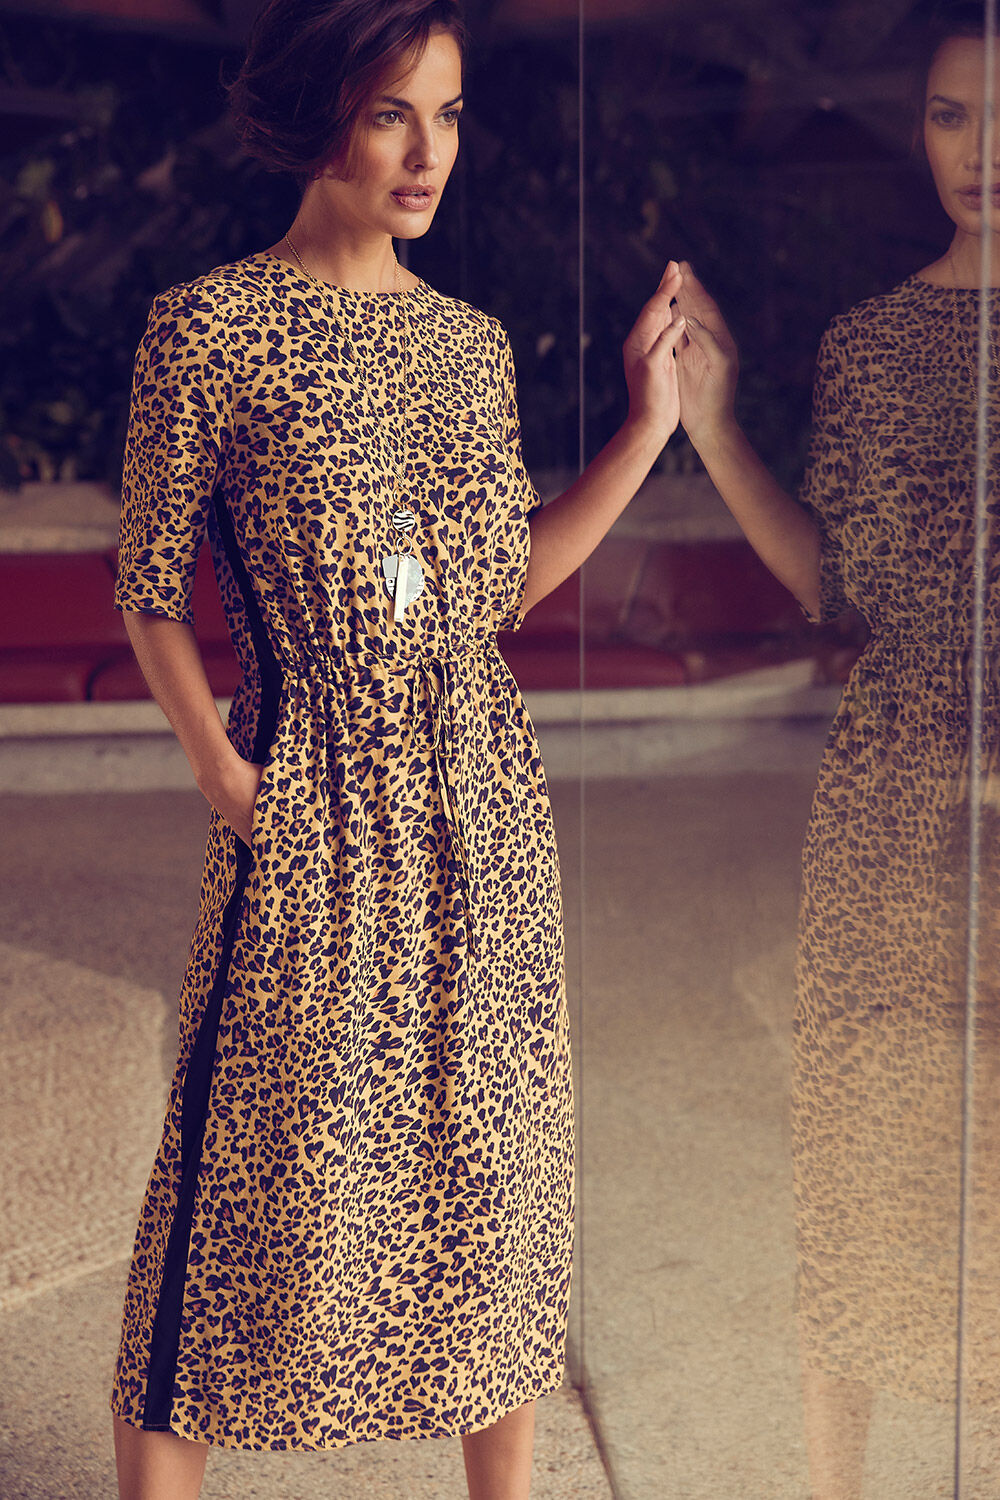 bon marche leopard print dress